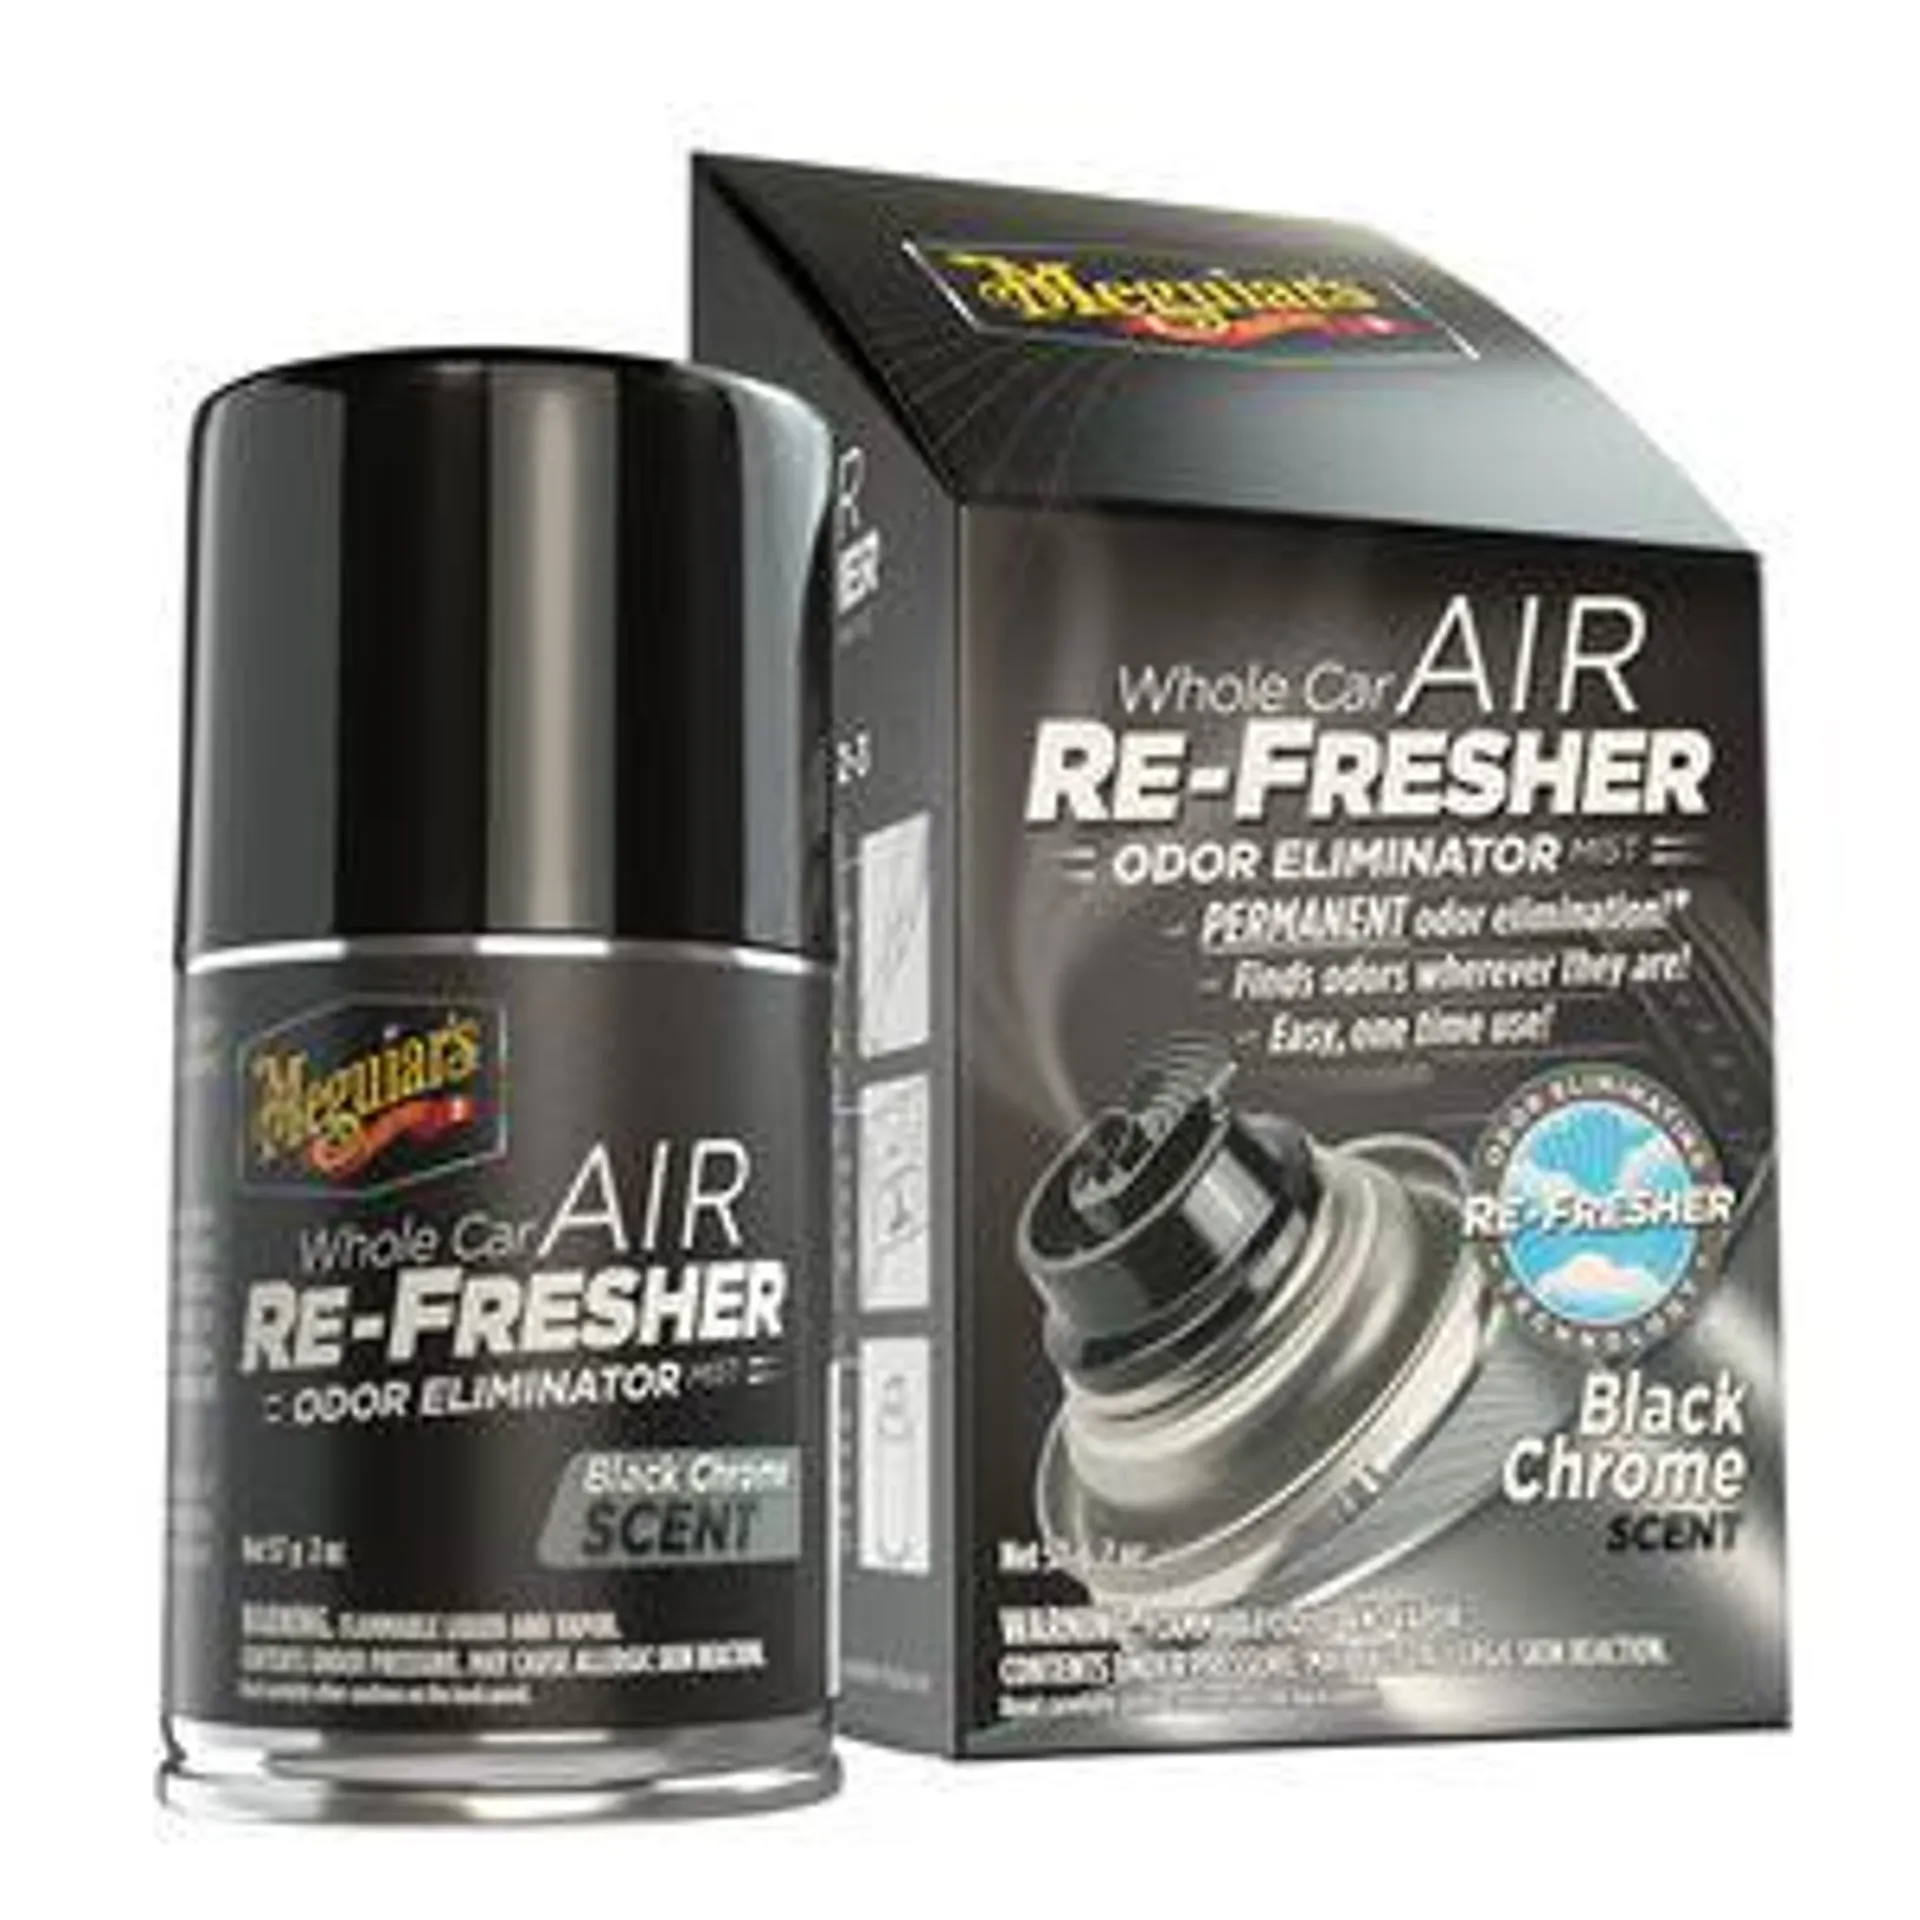 Meguiar's Whole Car Air Re-Fresher Black Chrome Scent Odor Eliminator Spray 2oz